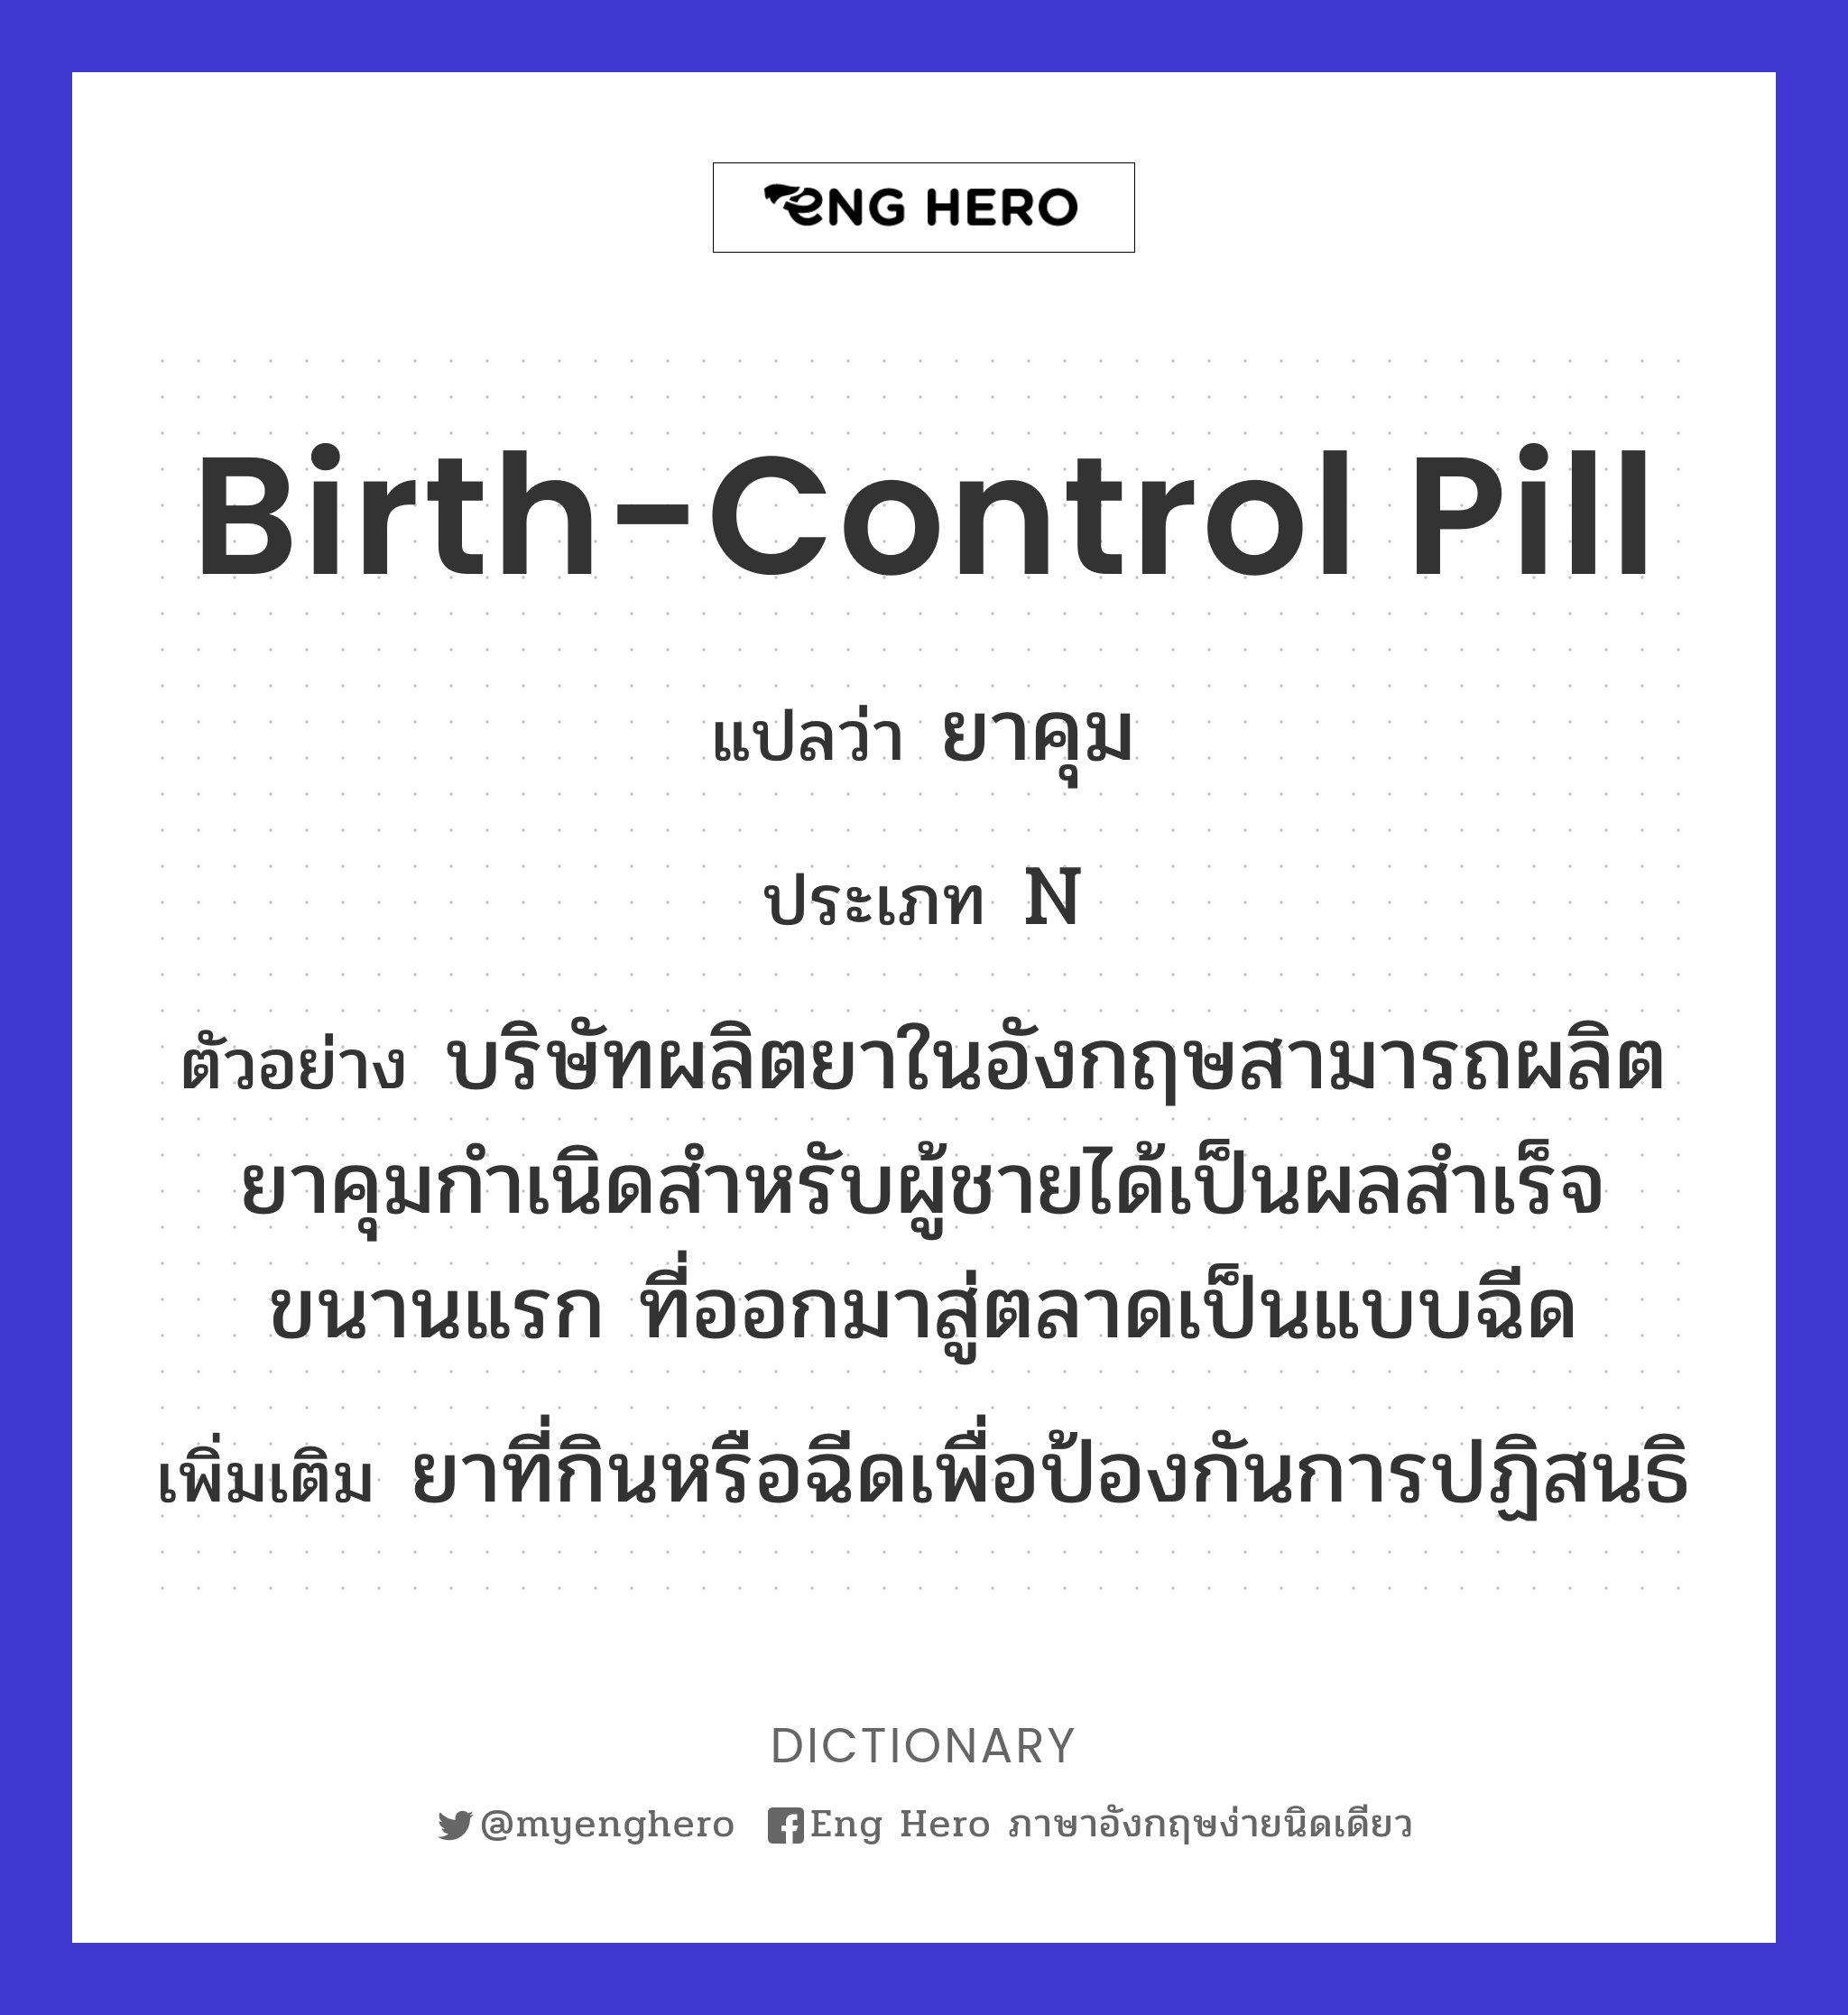 birth-control pill